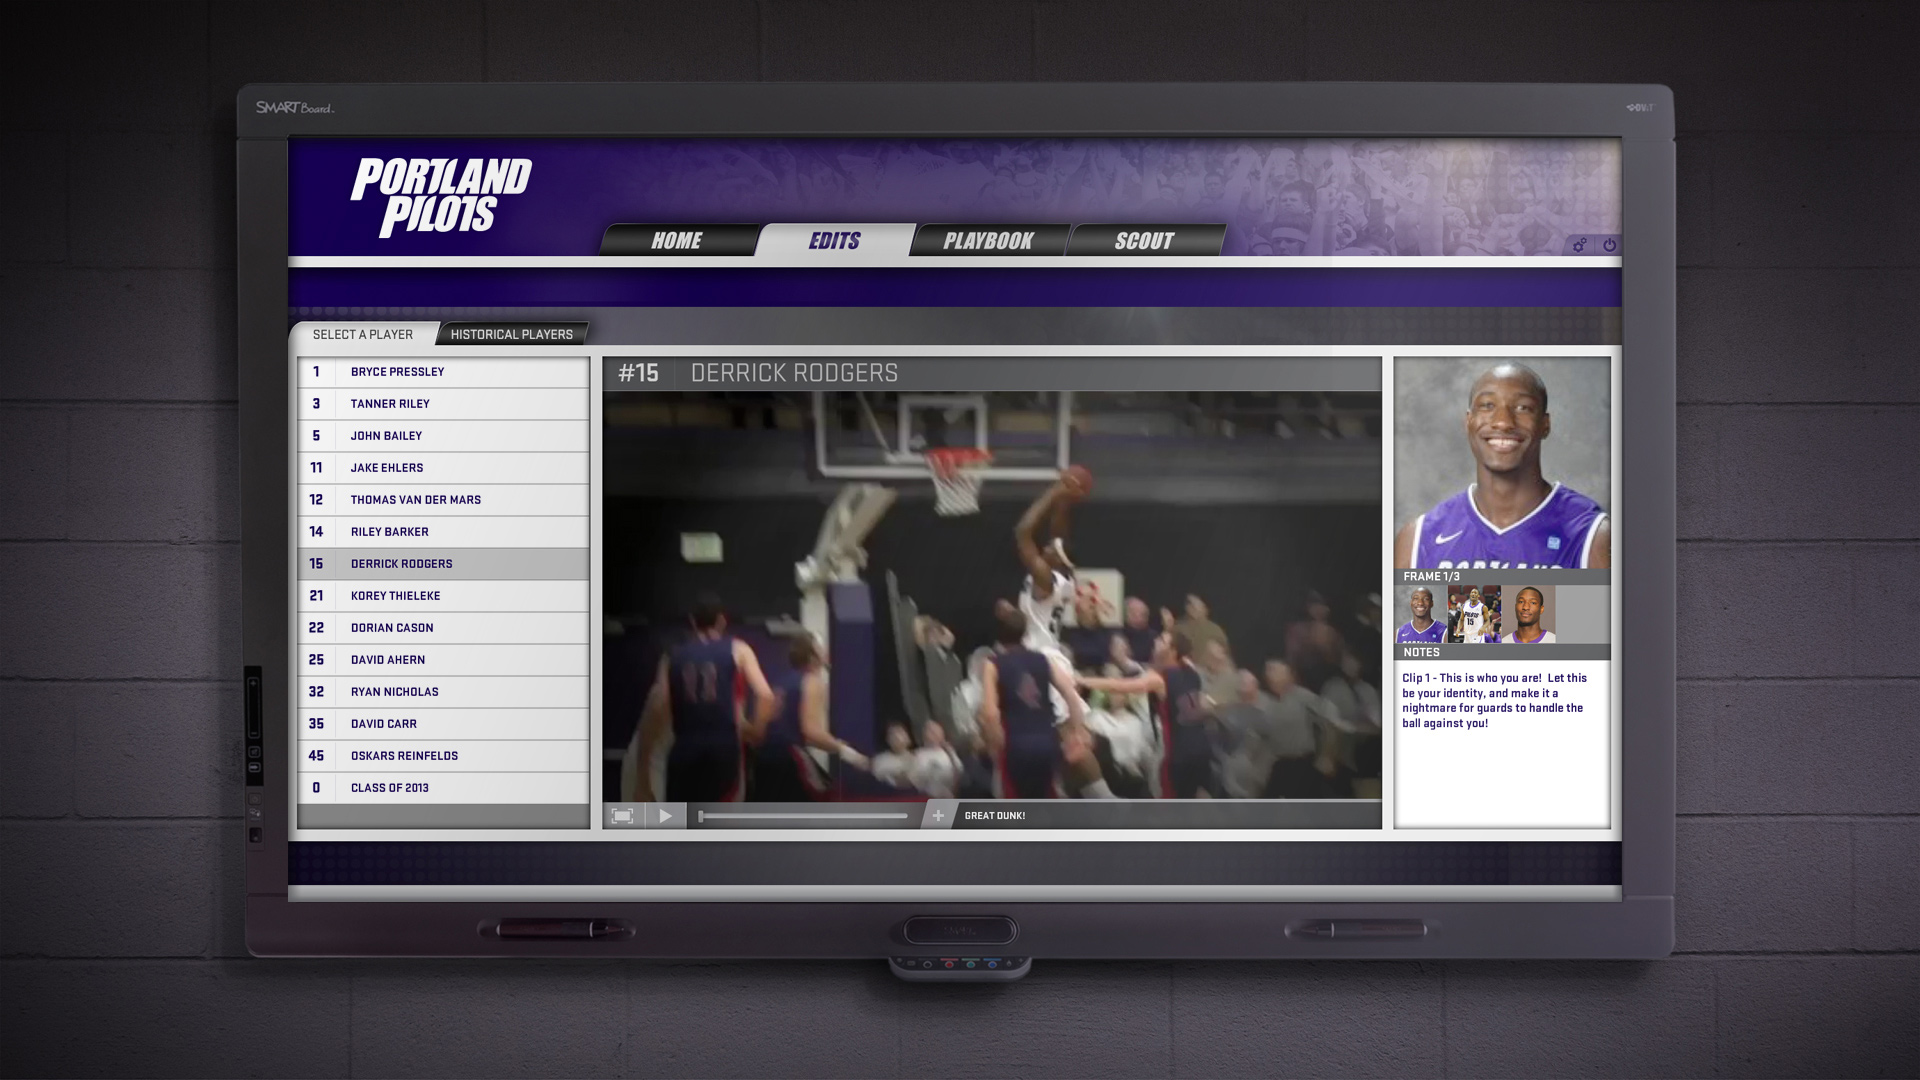 University of Portland Pilots Basketball Coaching App on touchscreen tv